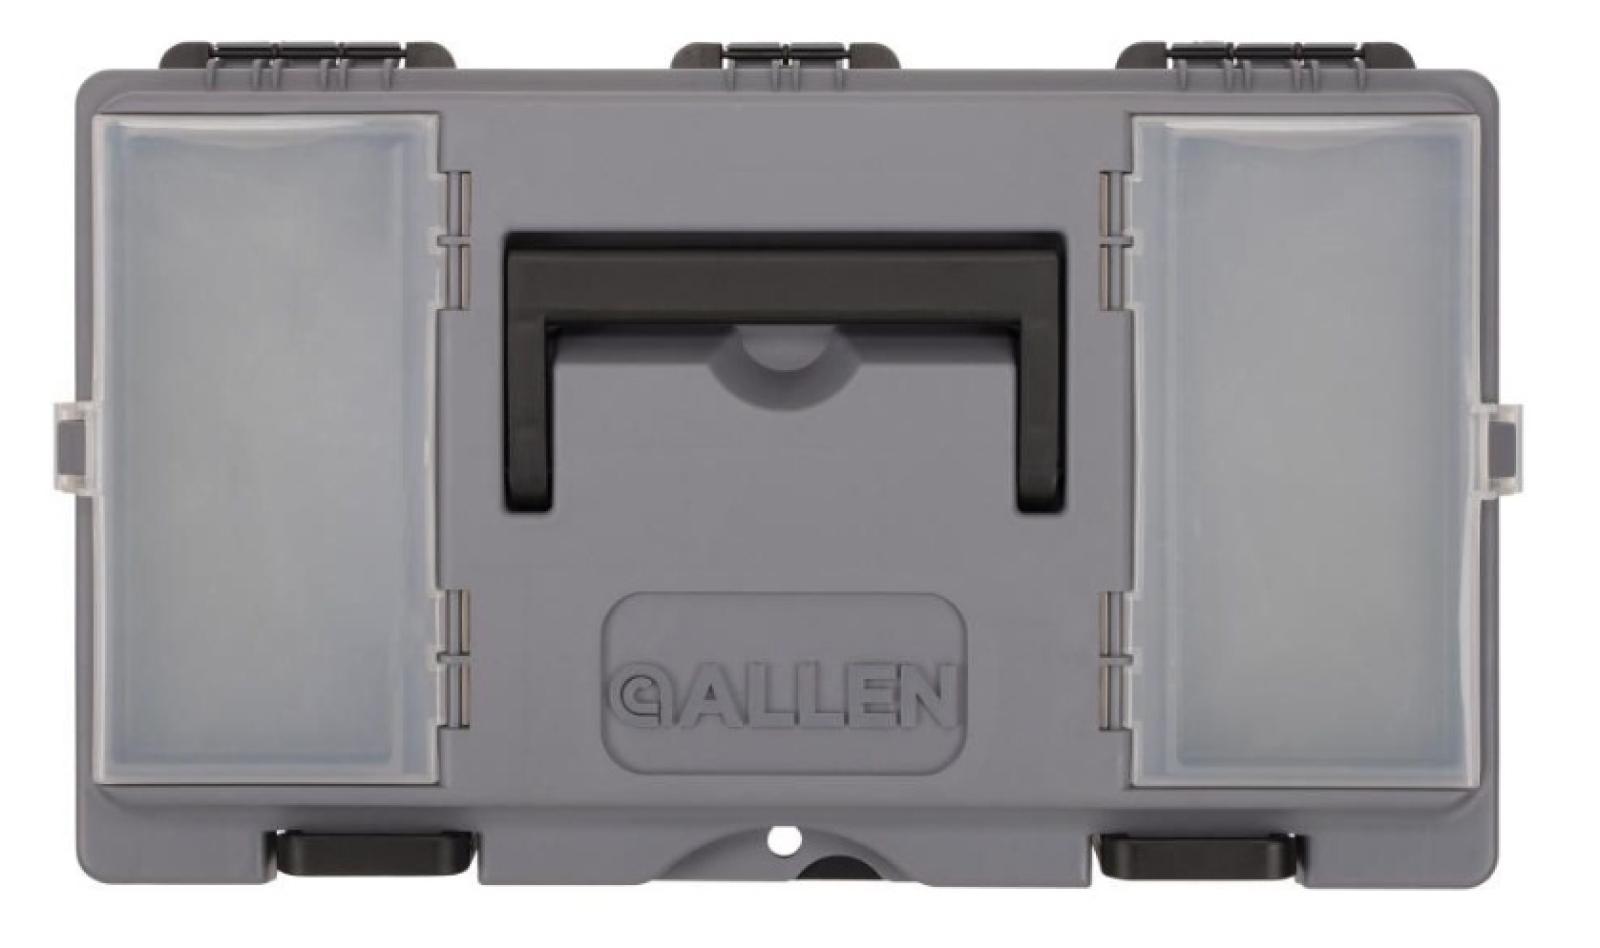 Allen Tool Box Gun Cleaning Kit